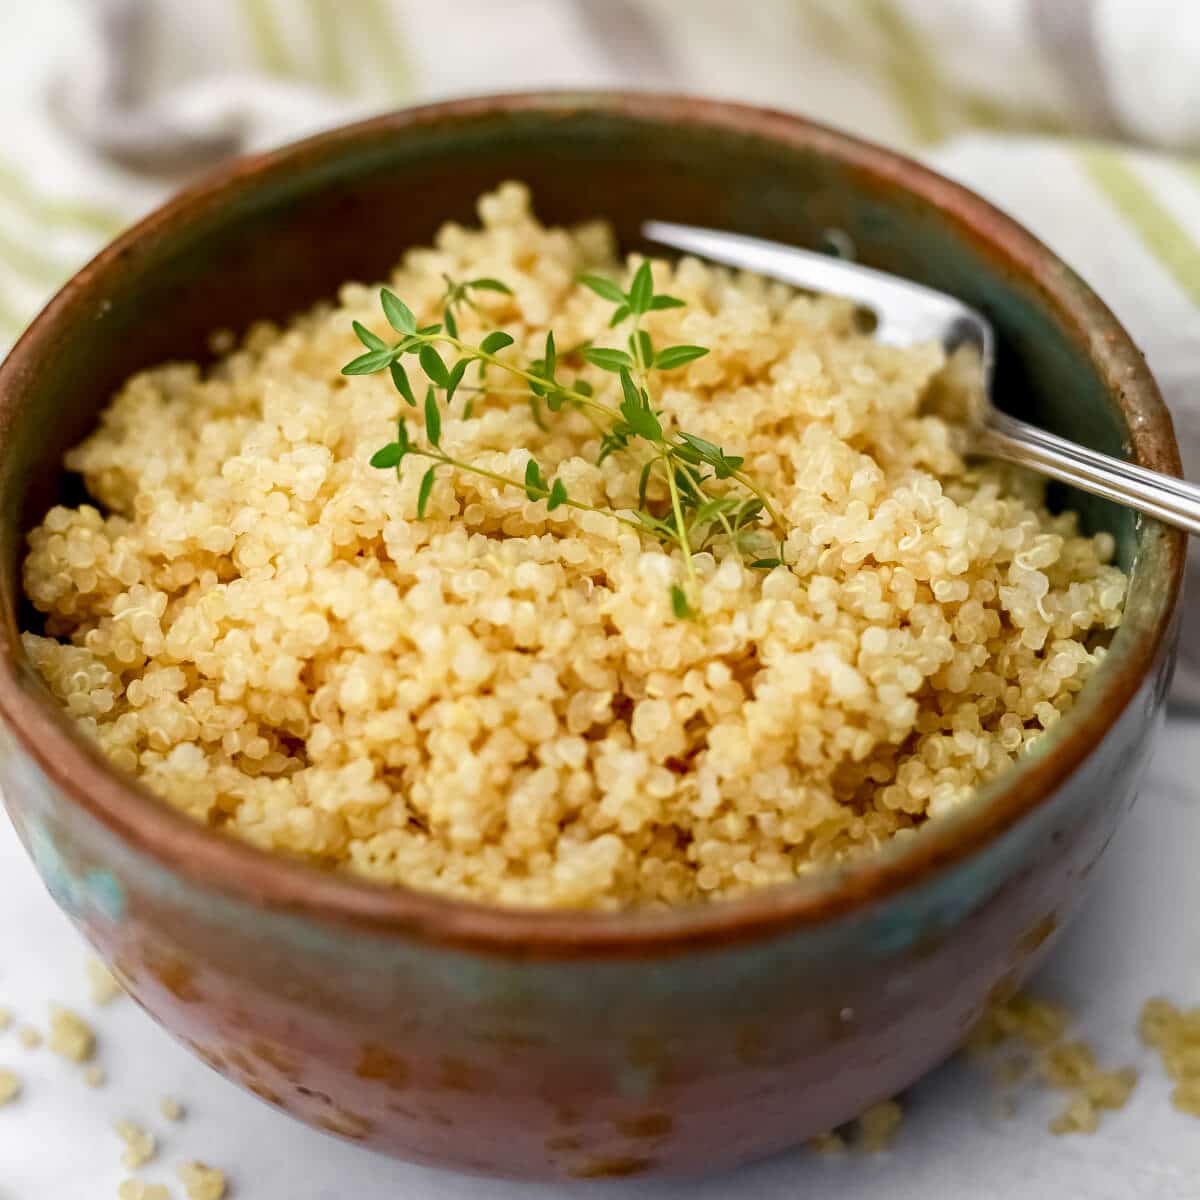 How to cook quinoa